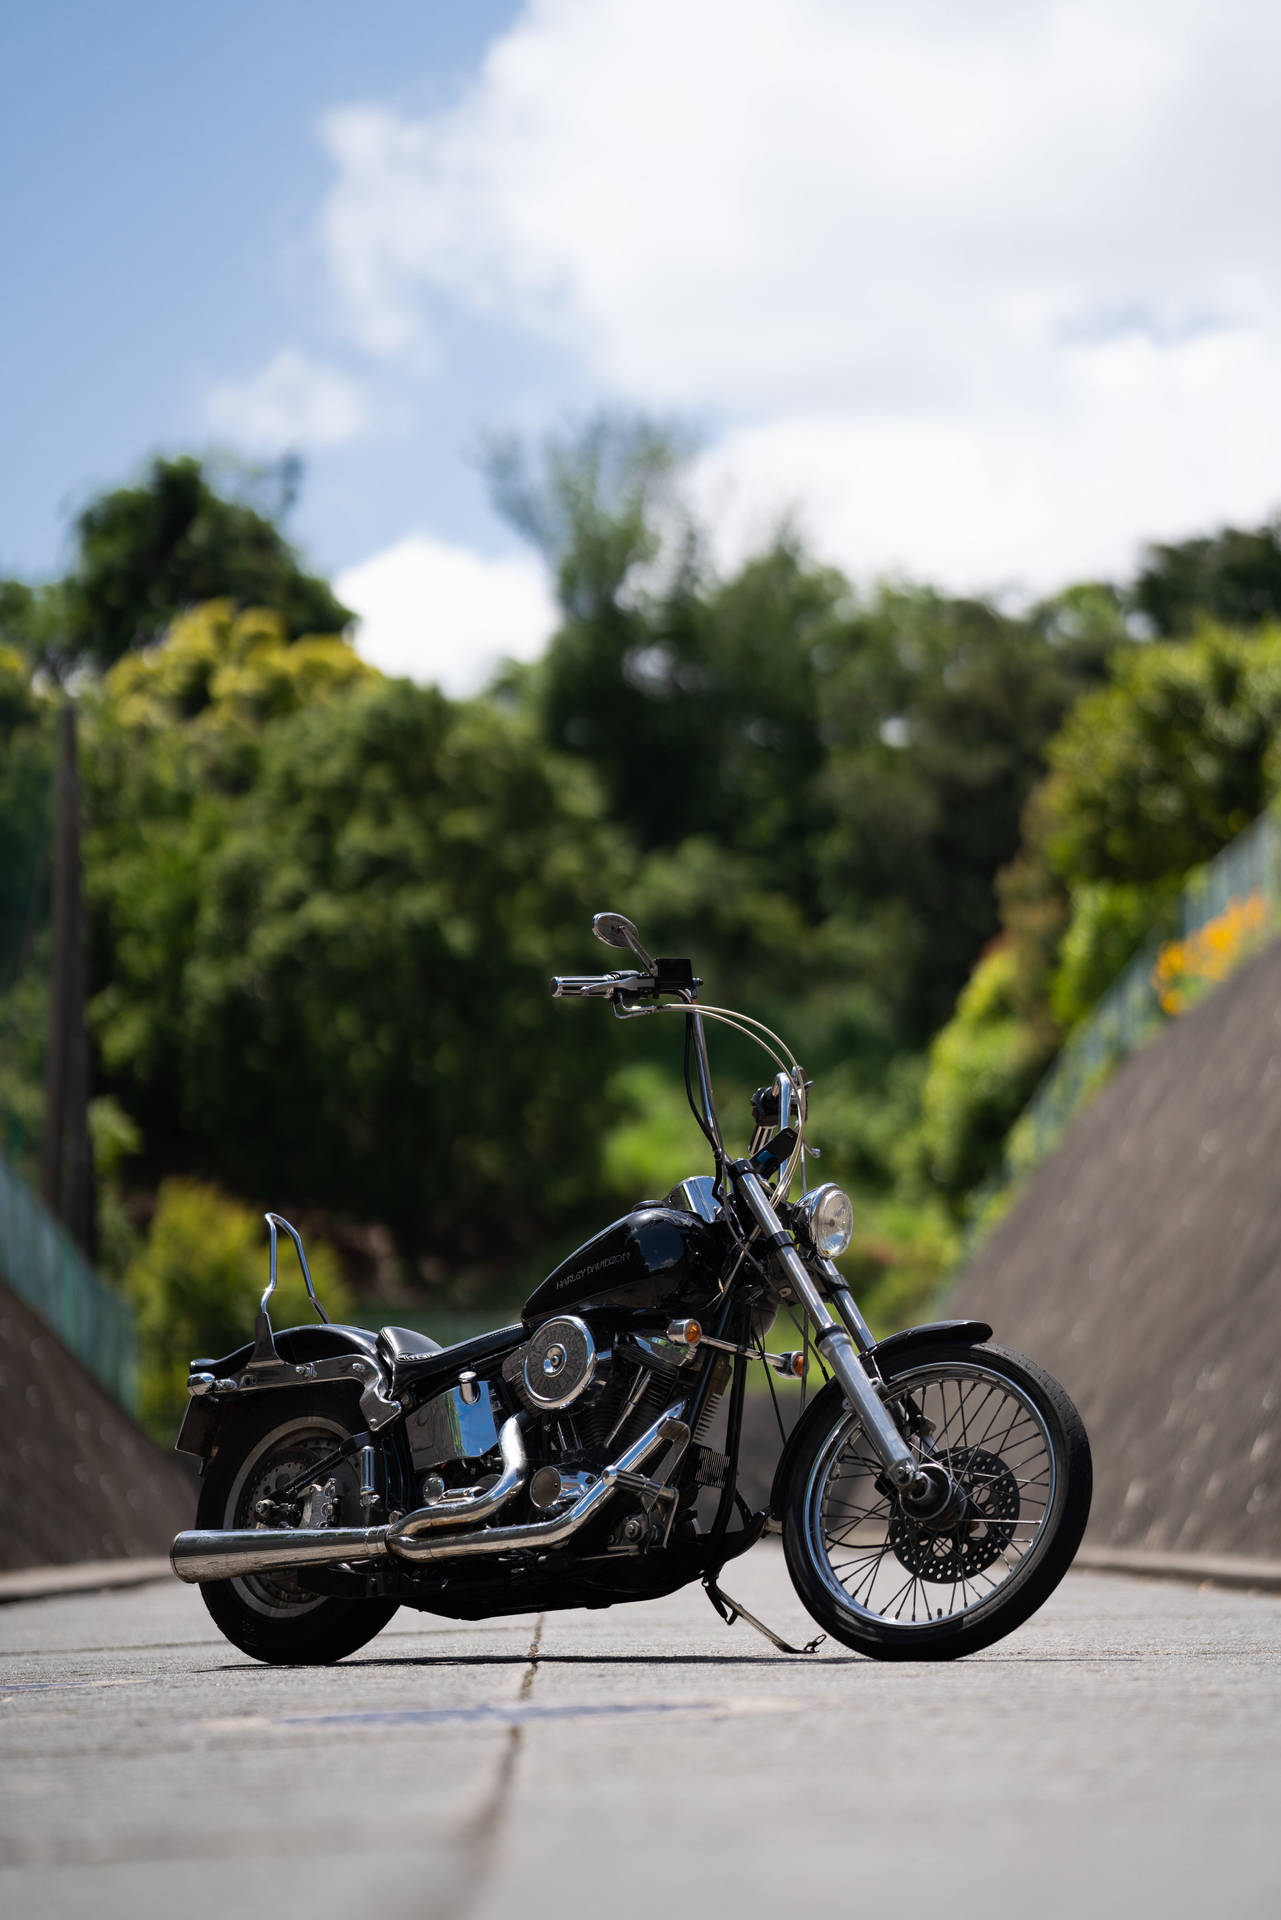 Long Handle Bar Harley Davidson Wallpaper